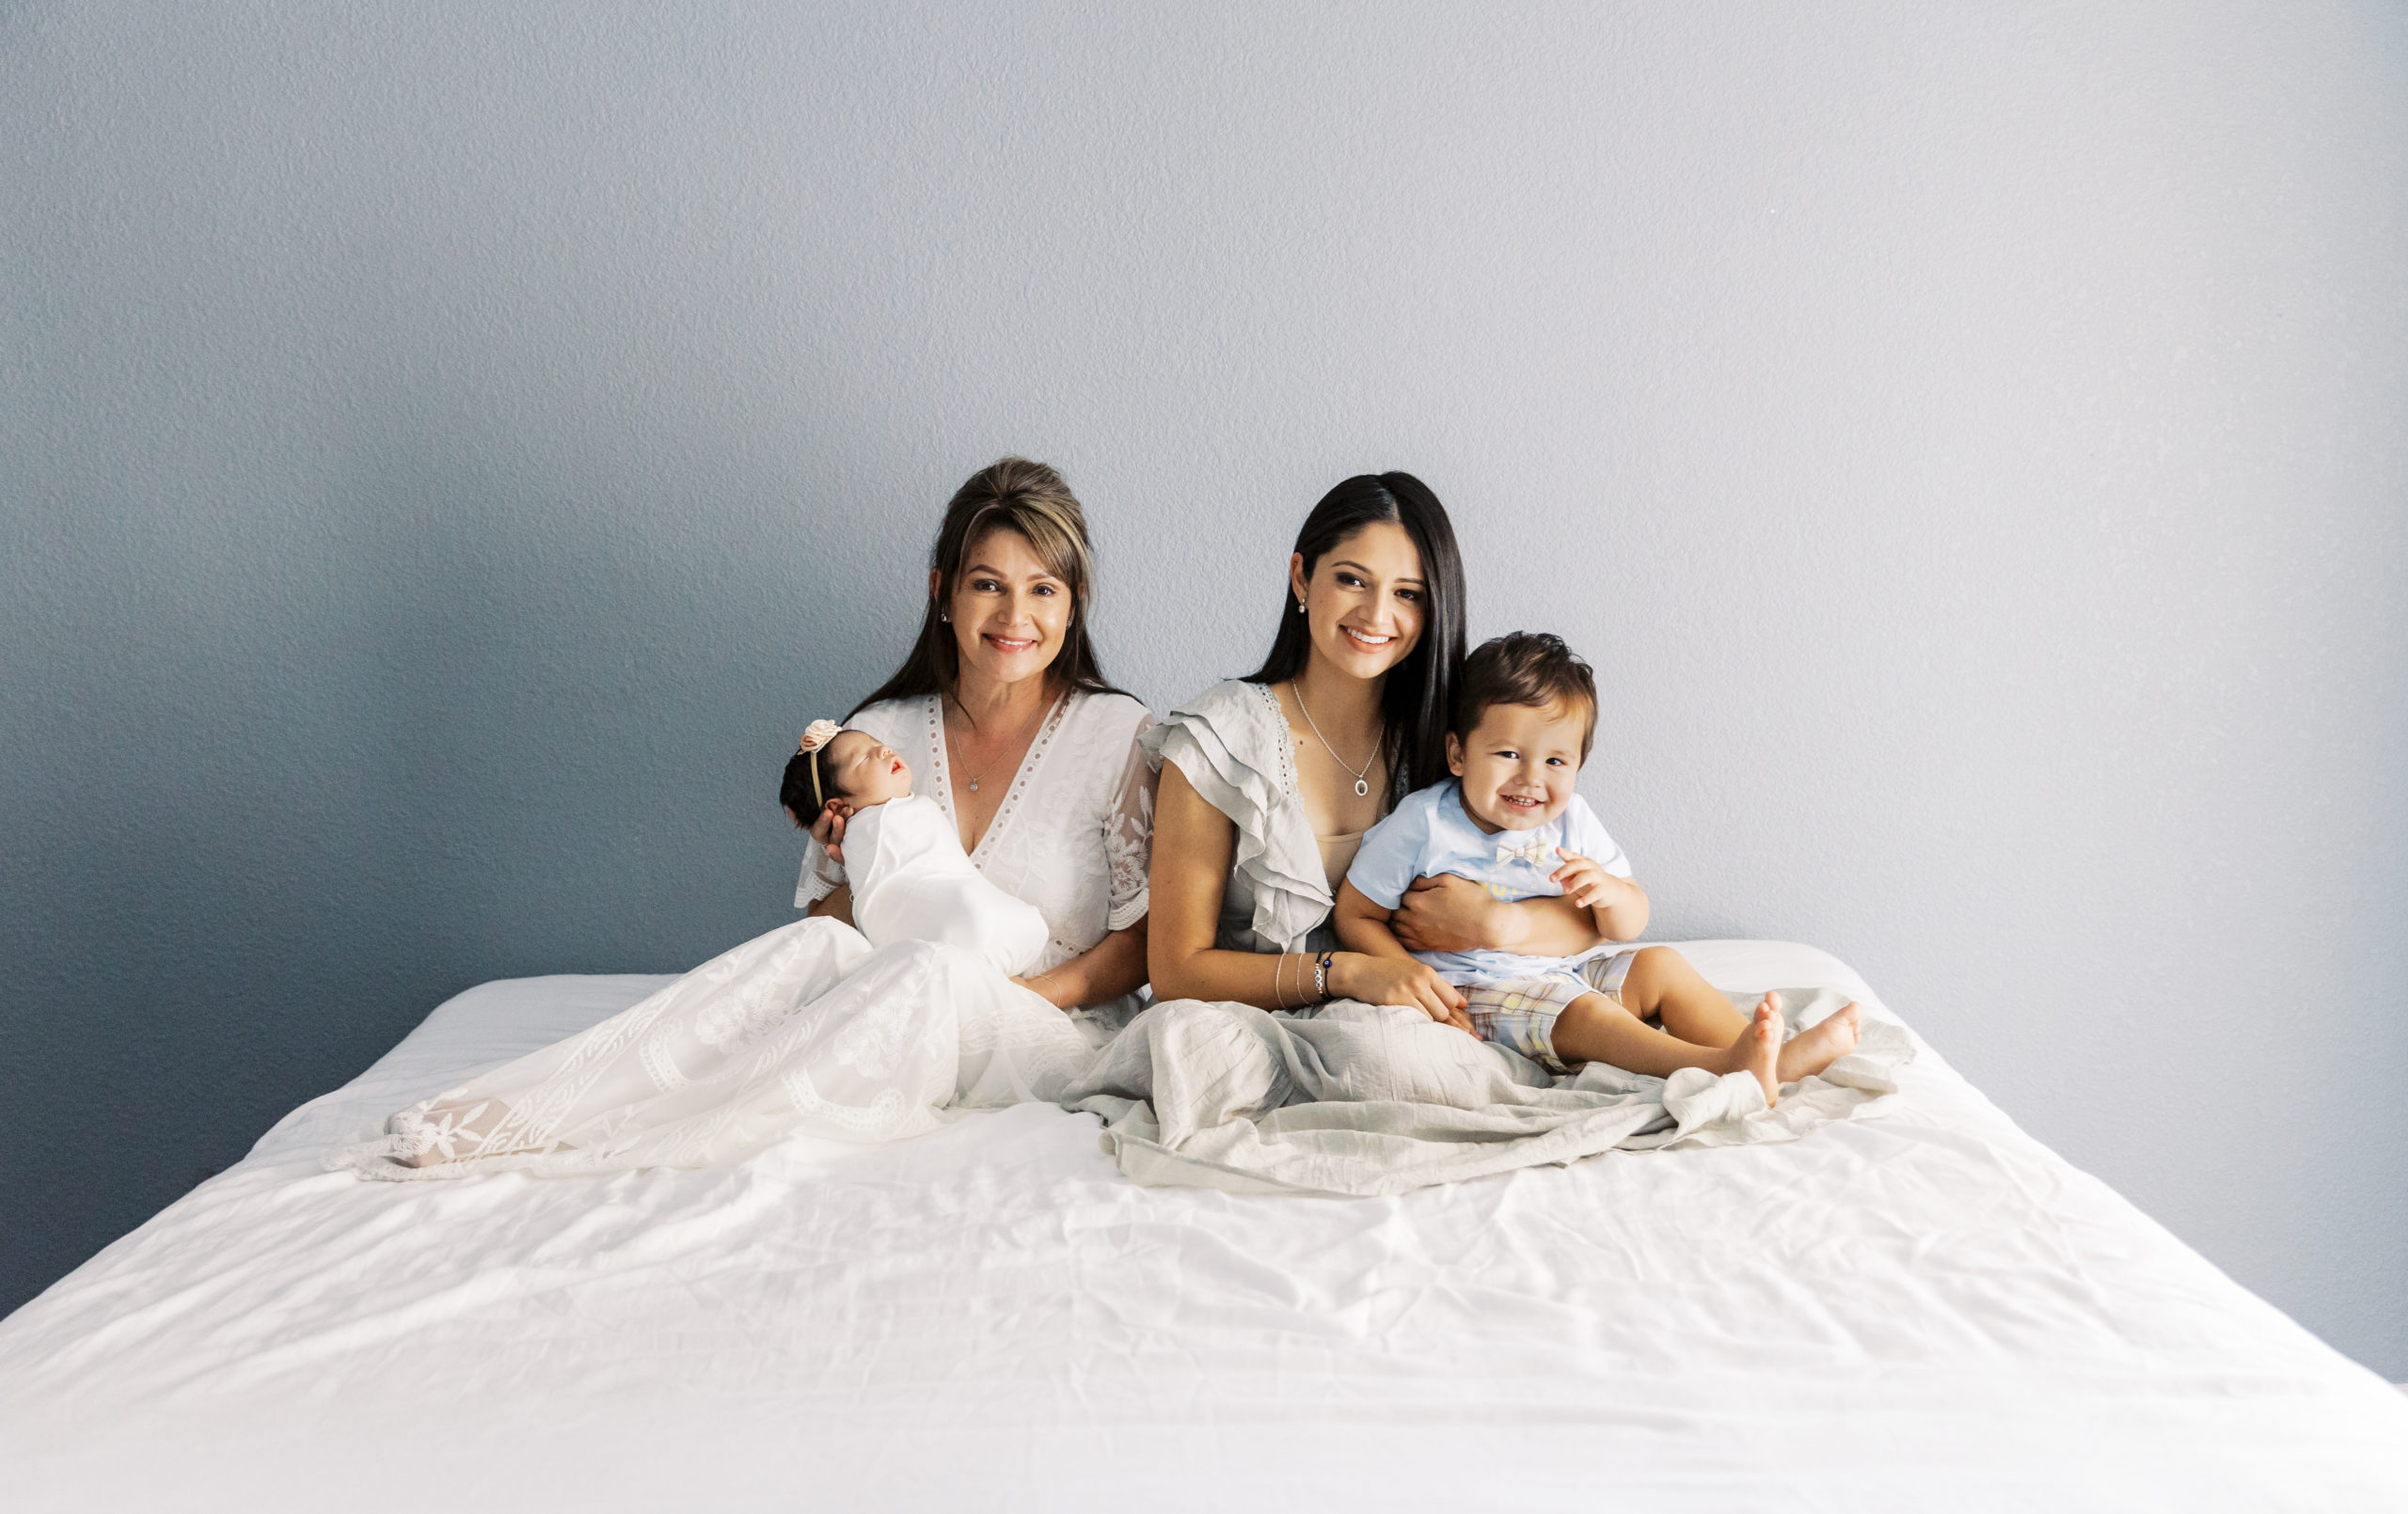 yuma-newborn-photography-family-on-bed-portrait